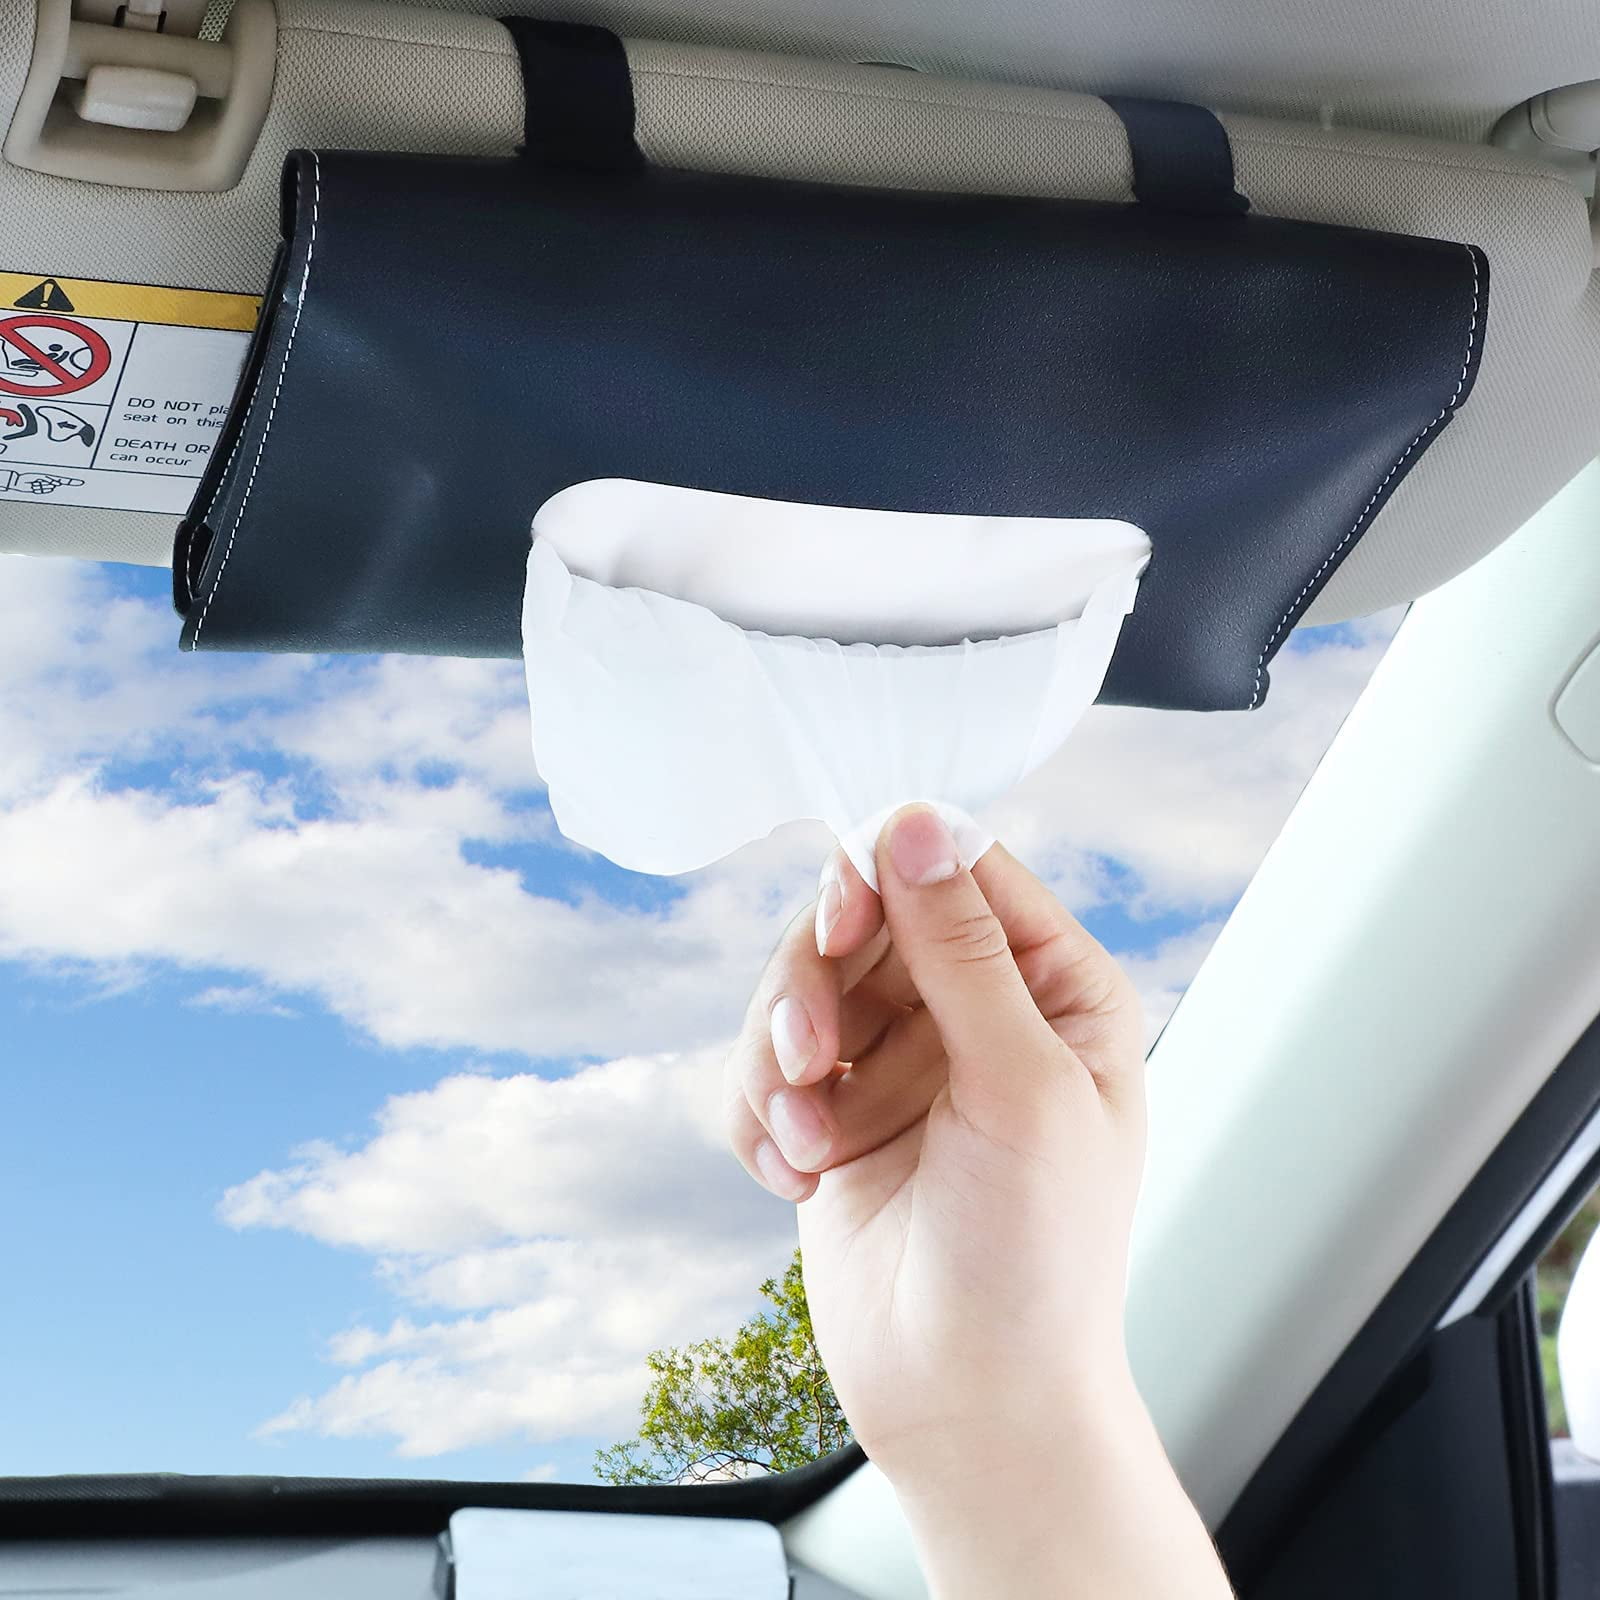 Car Sun Visor Tissue Box Holder PU Leather Paper Napkin Cover Auto Styling Case 